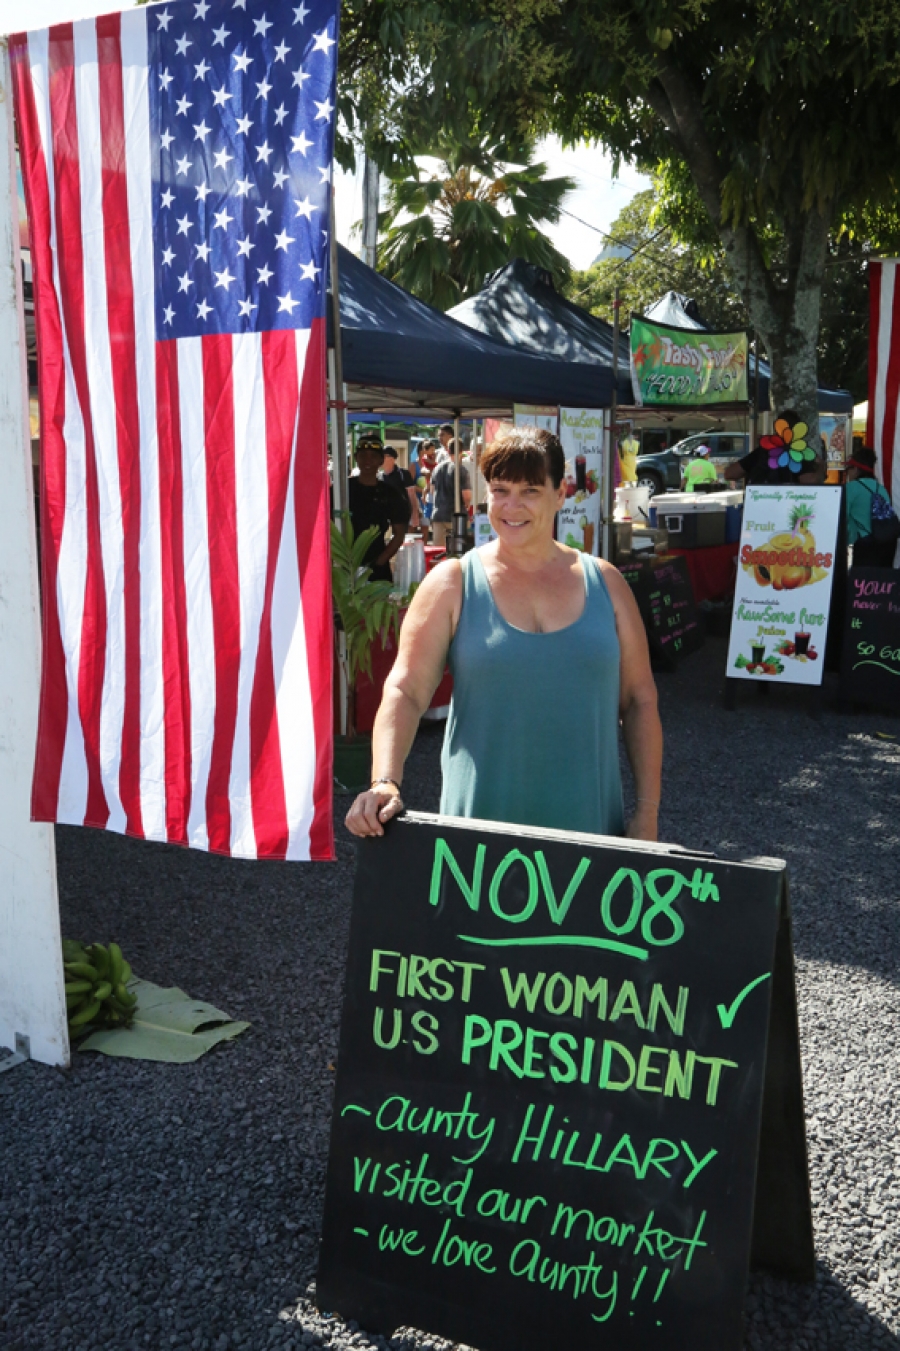 Rarotonga’s Americans backing Clinton